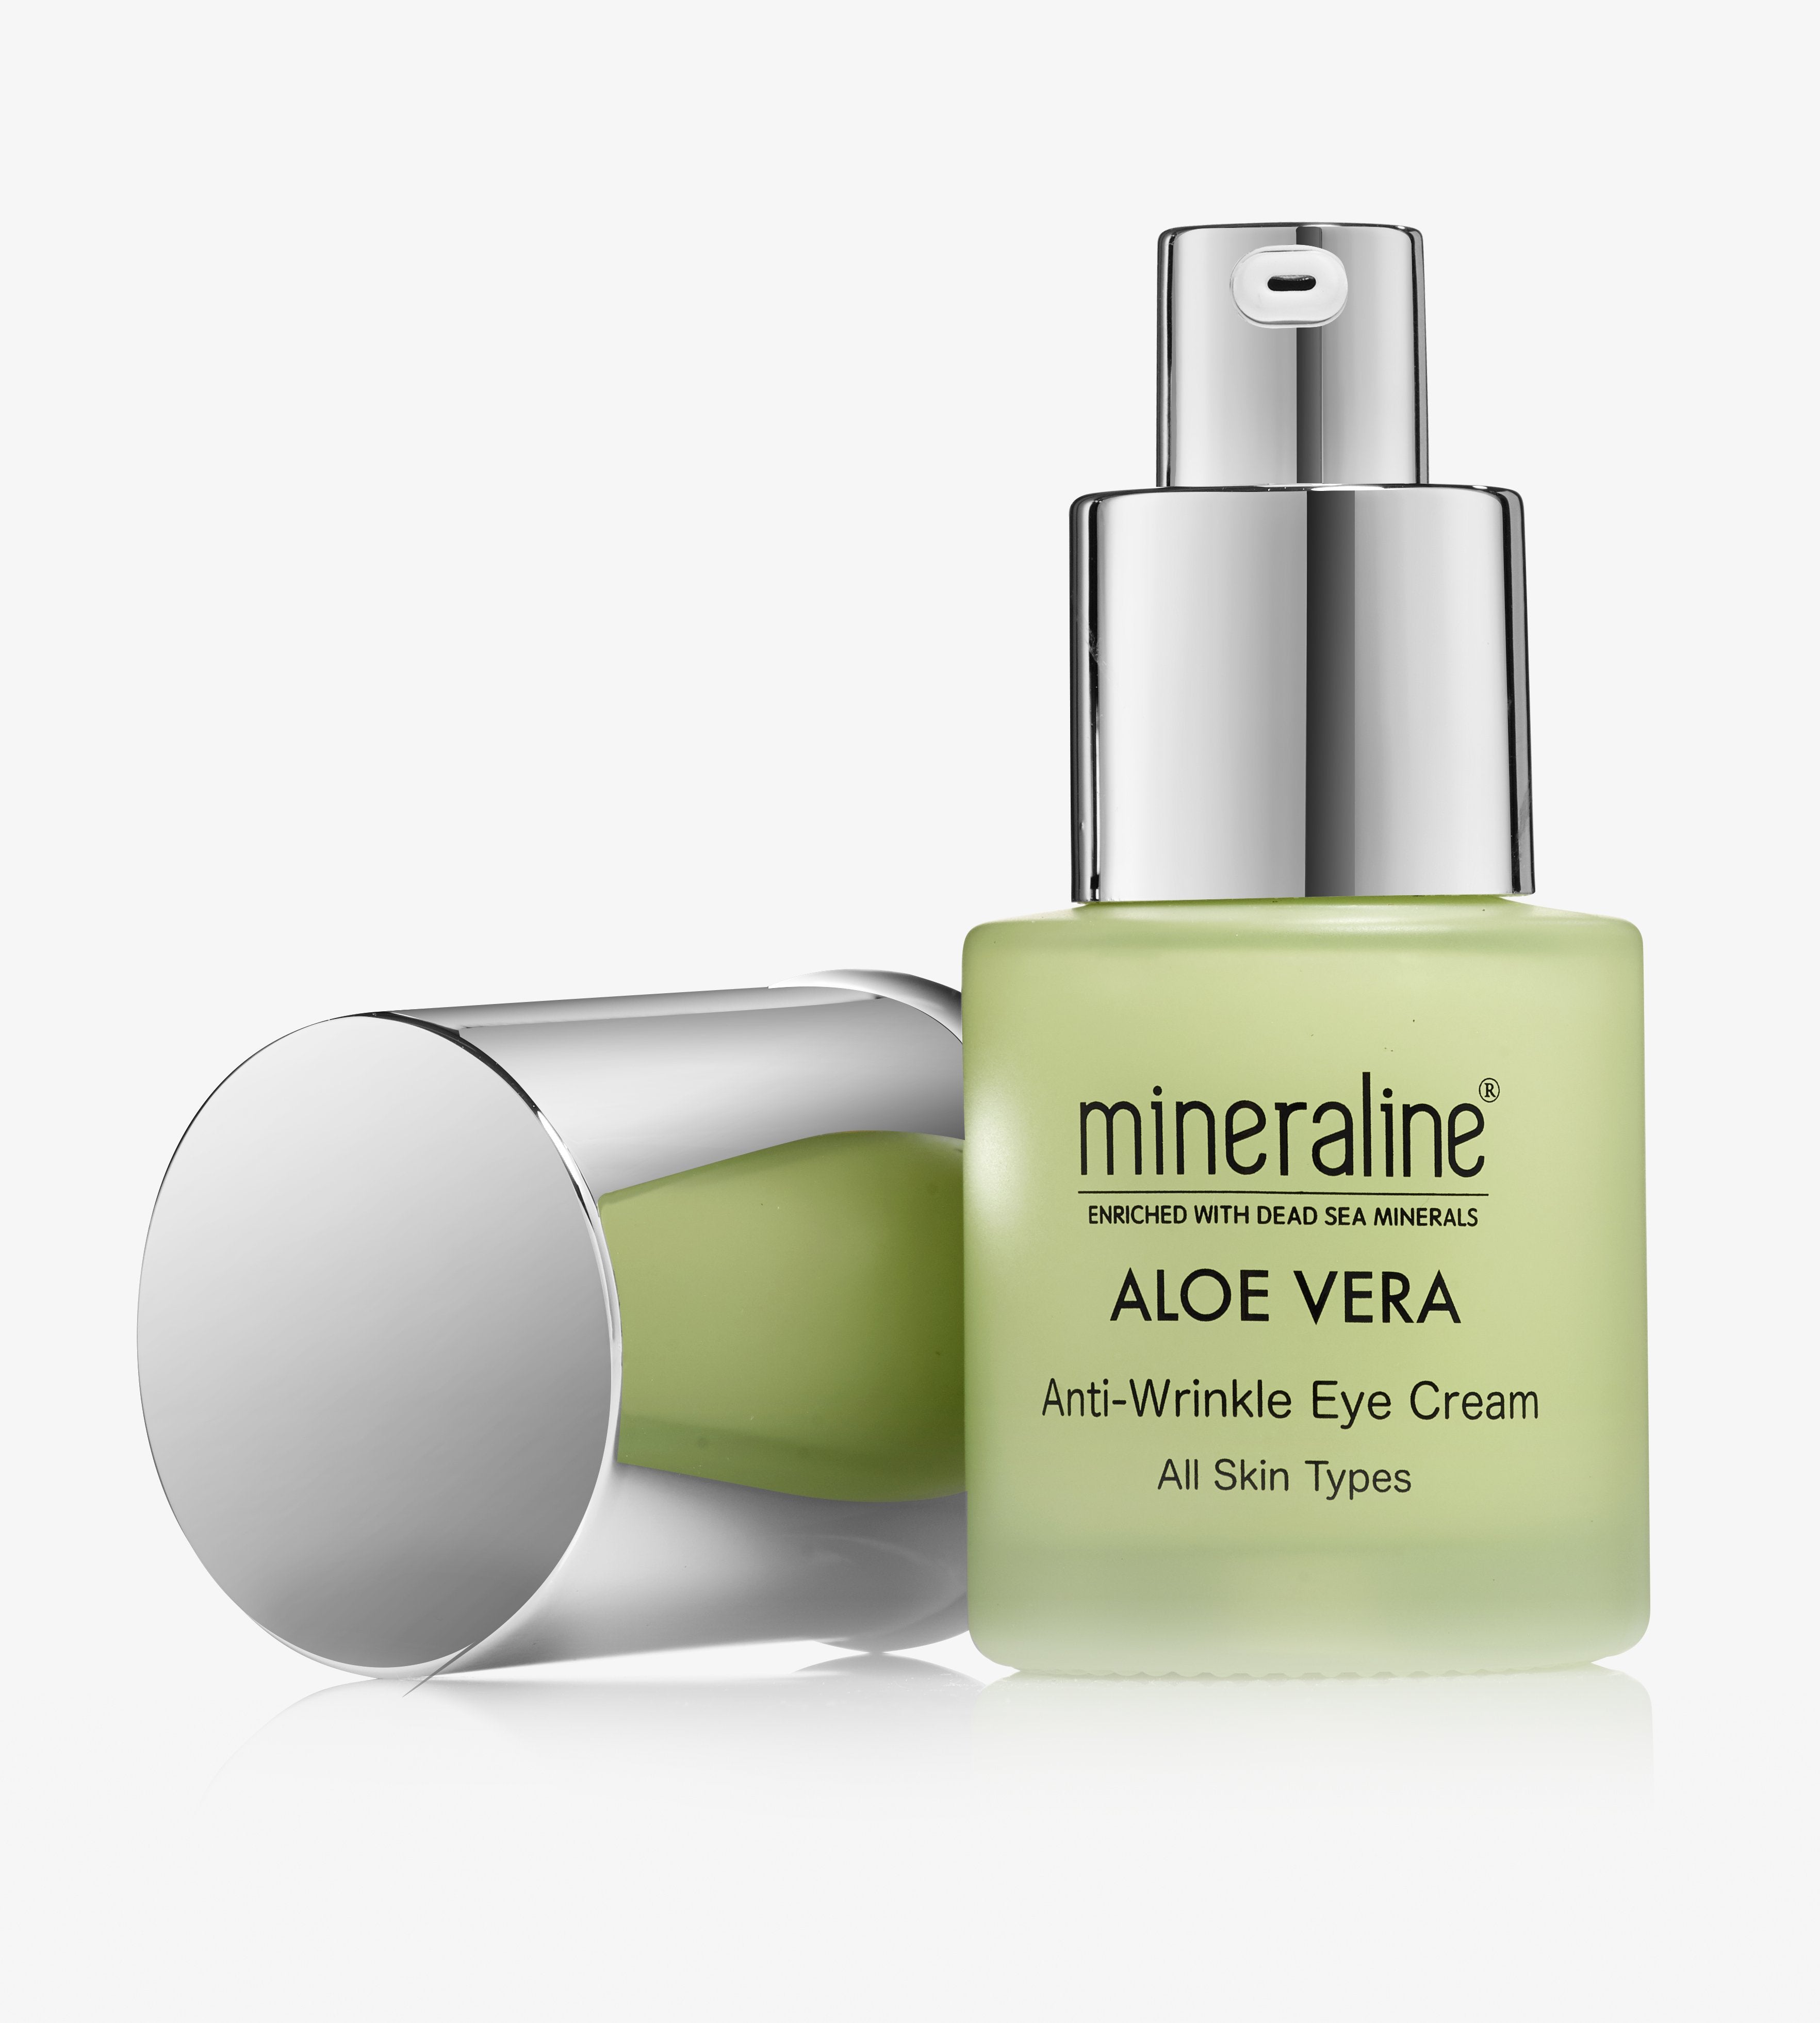 mineraline - Aloe Vera Anti-Wrinkle Eye Cream - Aloe Vera & Dead Sea minerals